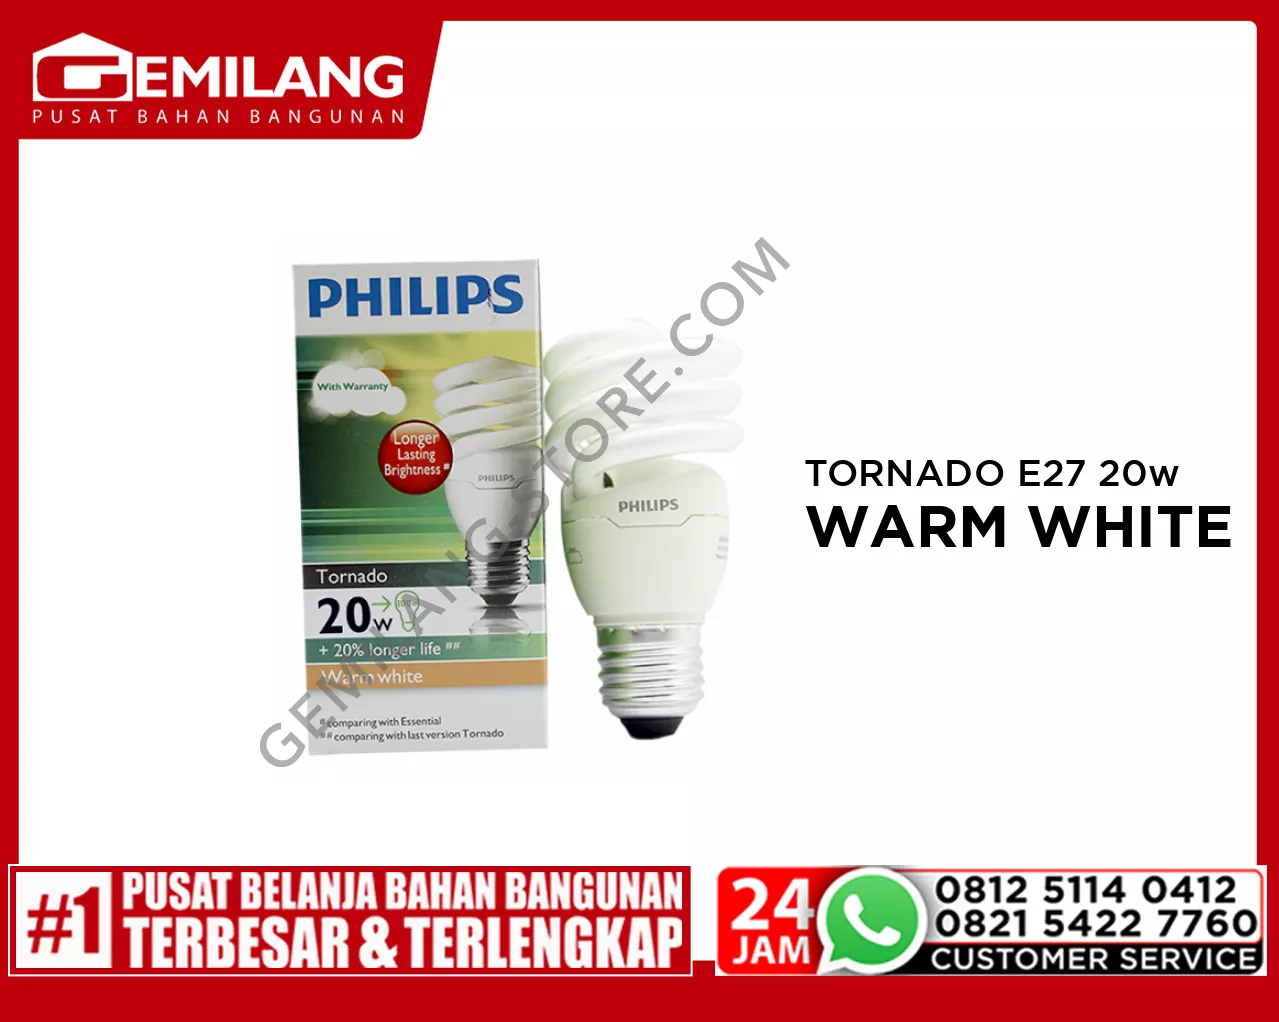 PHILIPS TORNADO E27 WARM WHITE 20w